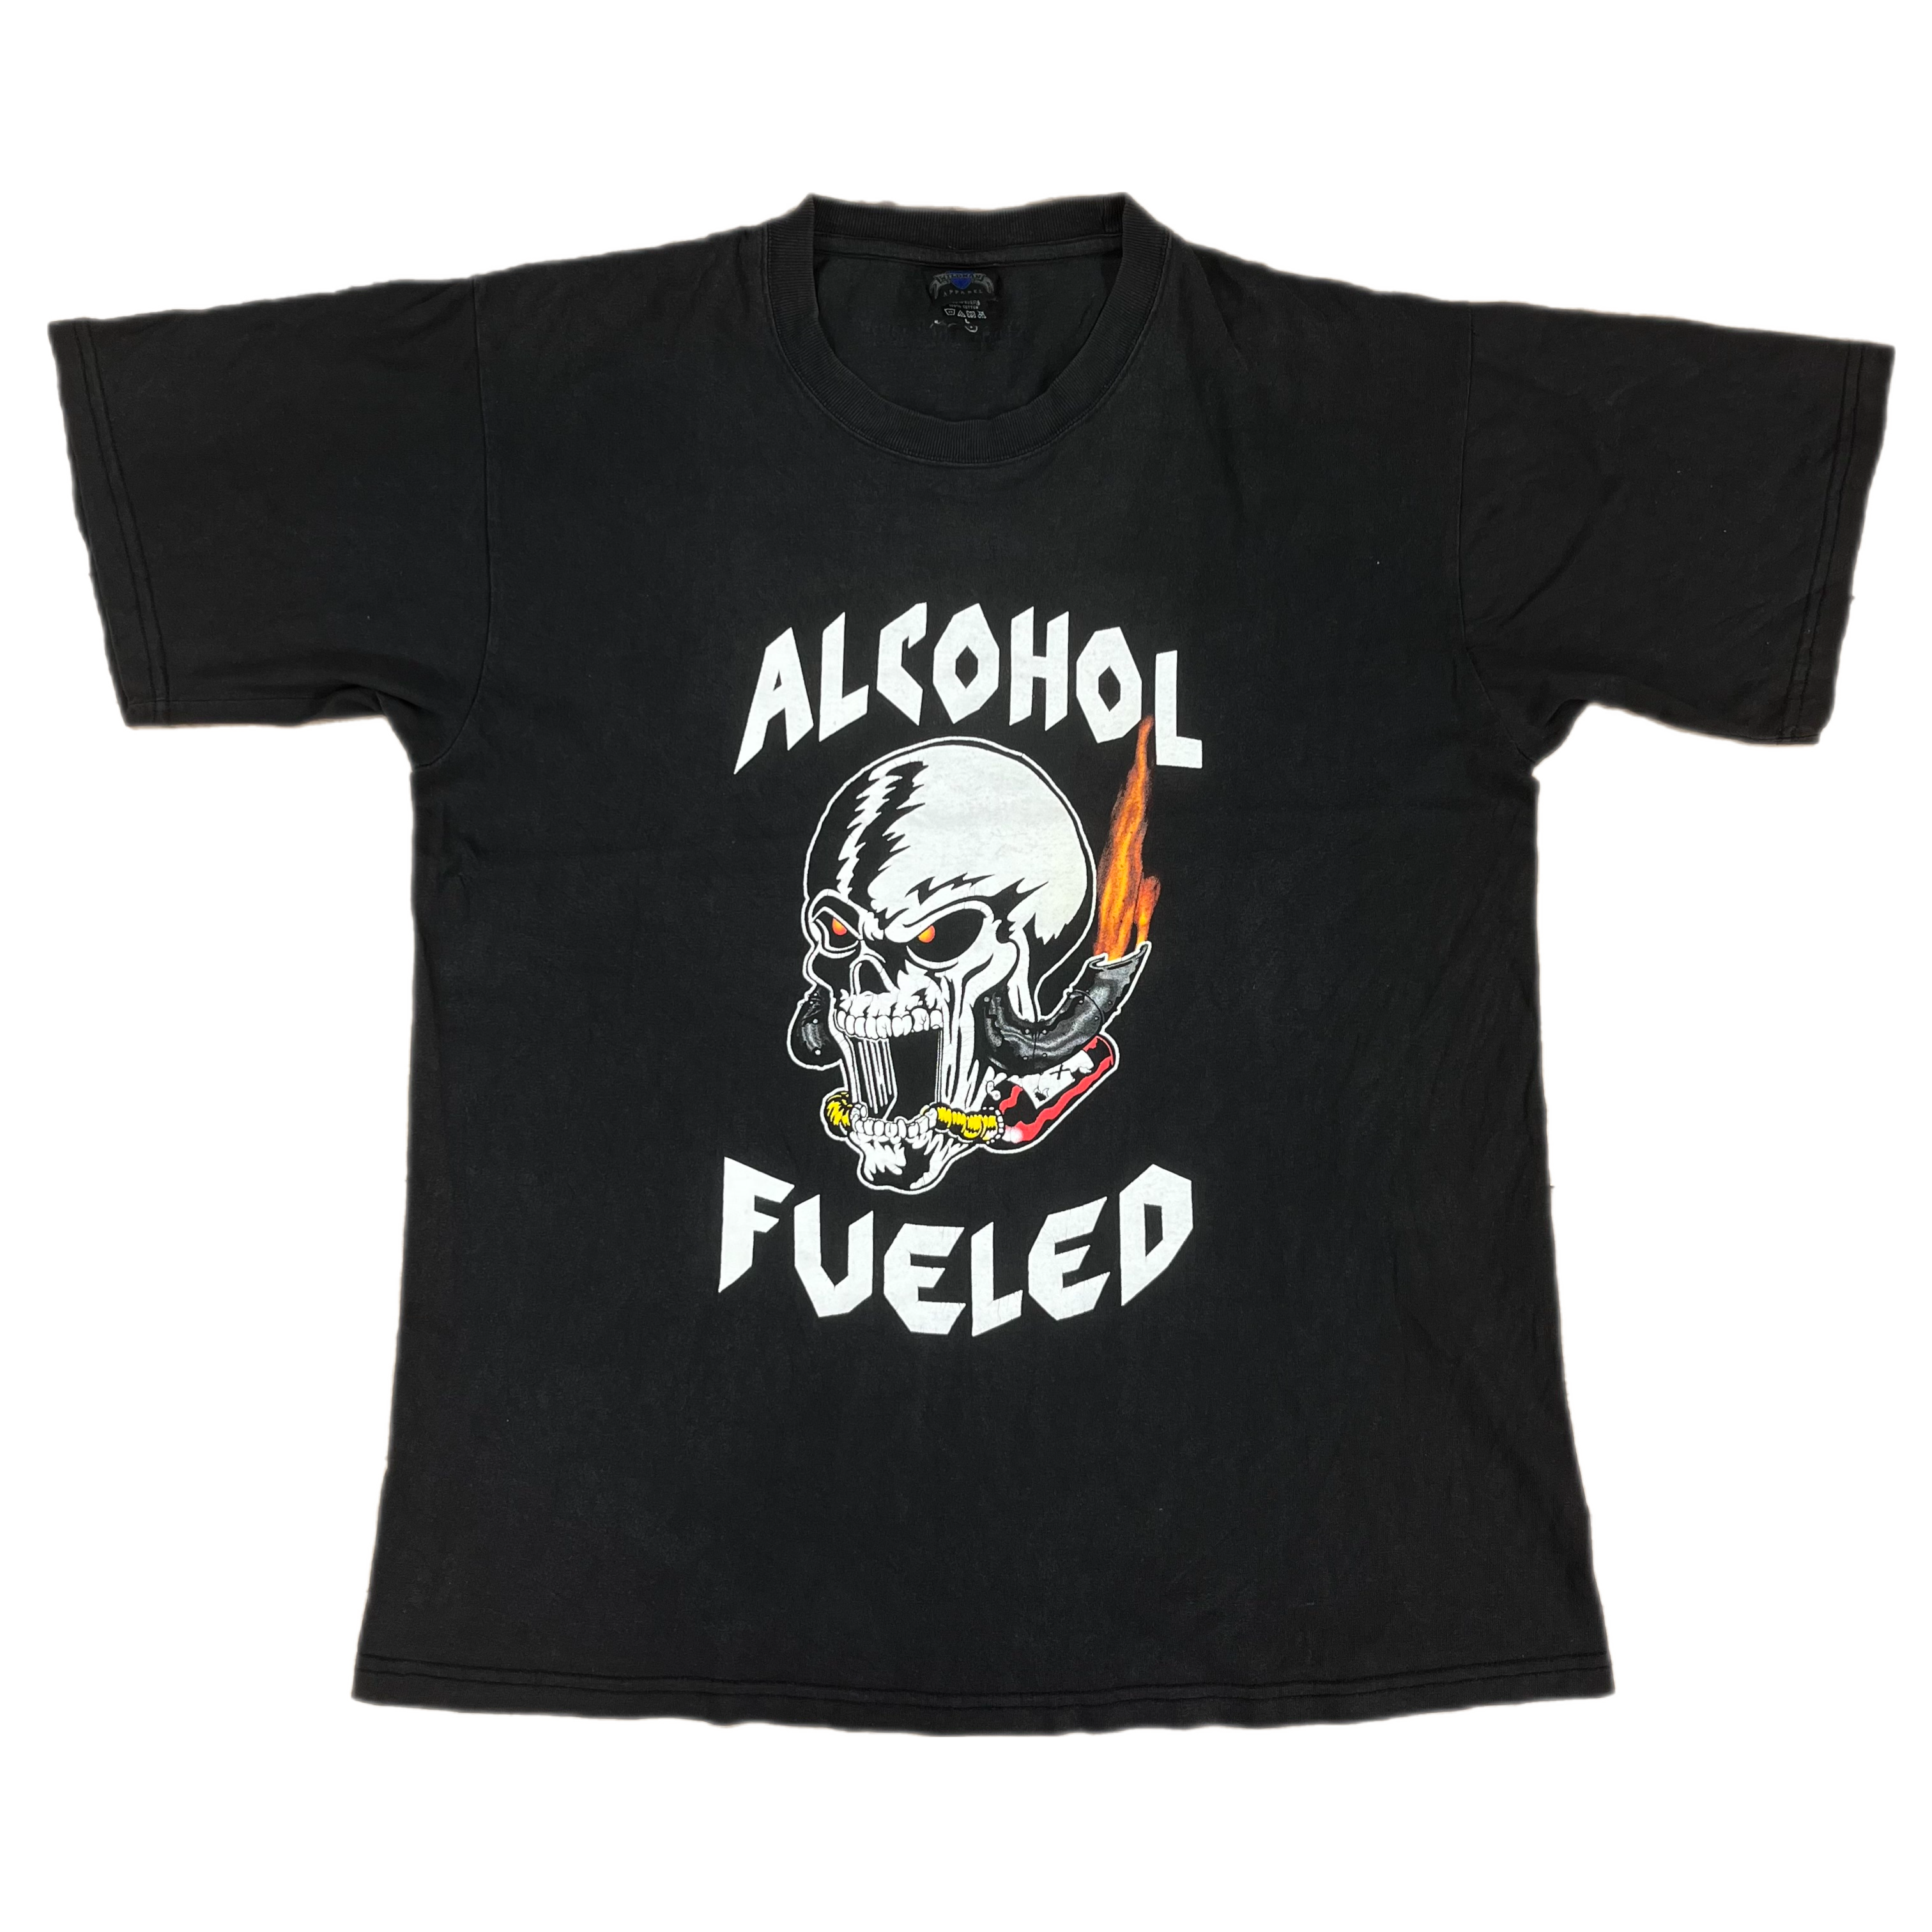 Vintage Stone Cold Steve Austin WWF "Alcohol Fueled" T-Shirt